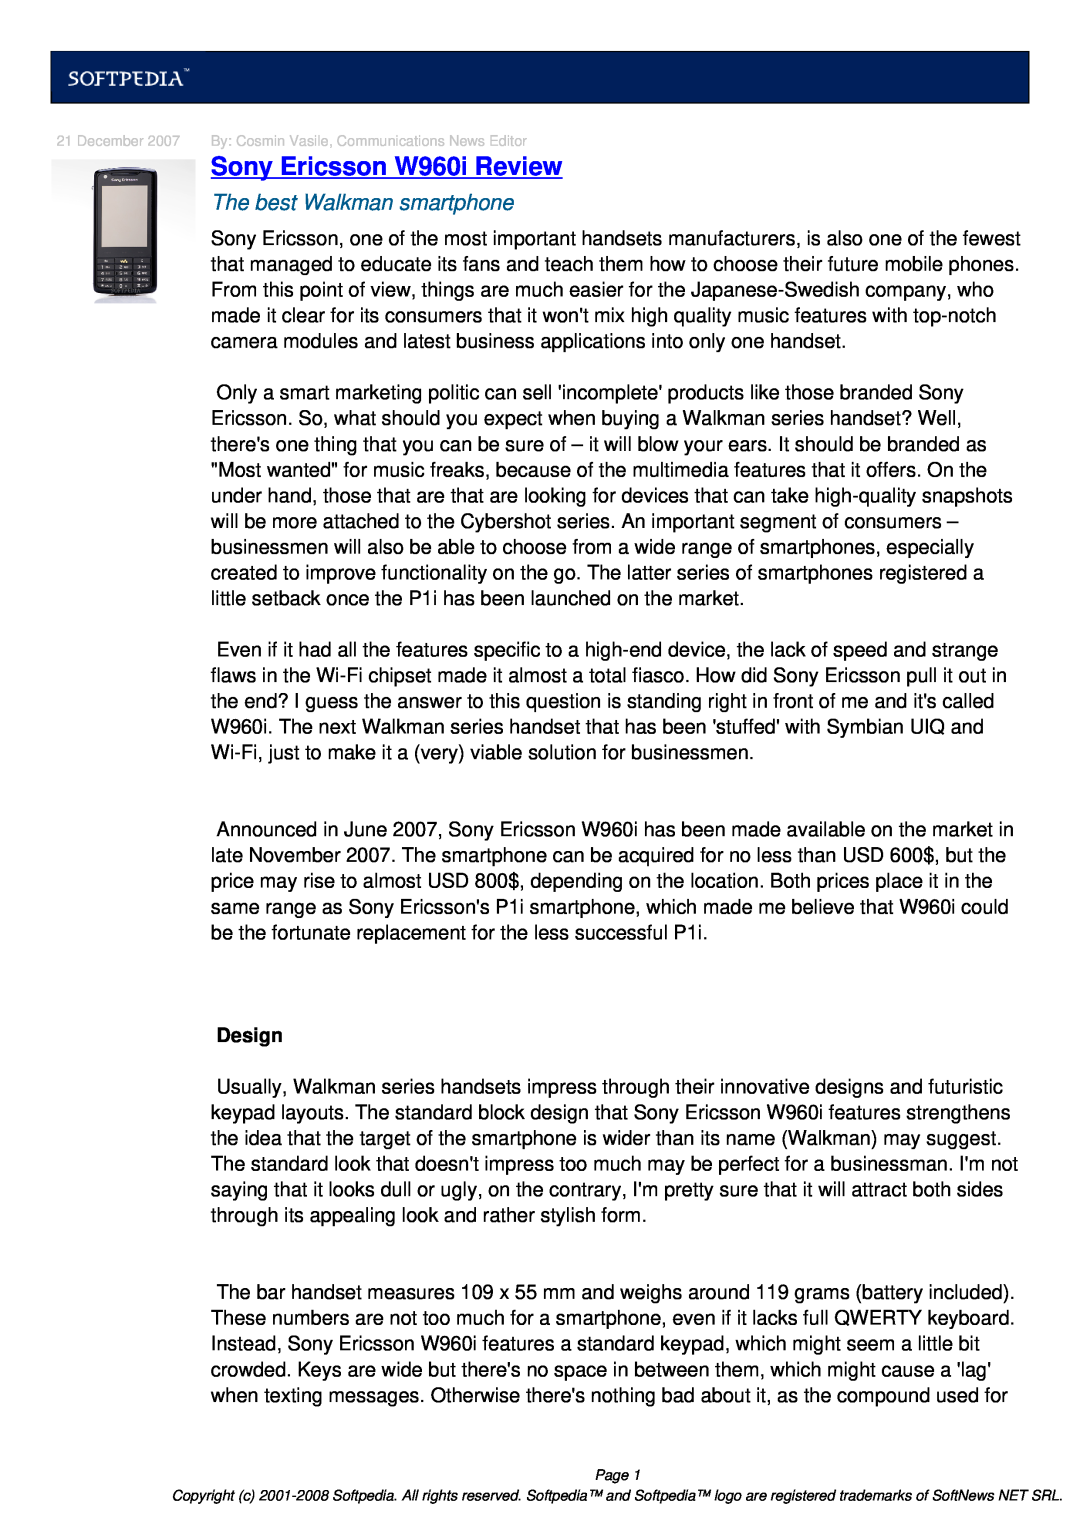 Sony Ericsson manual Design, Sony Ericsson W960i Review, The best Walkman smartphone 